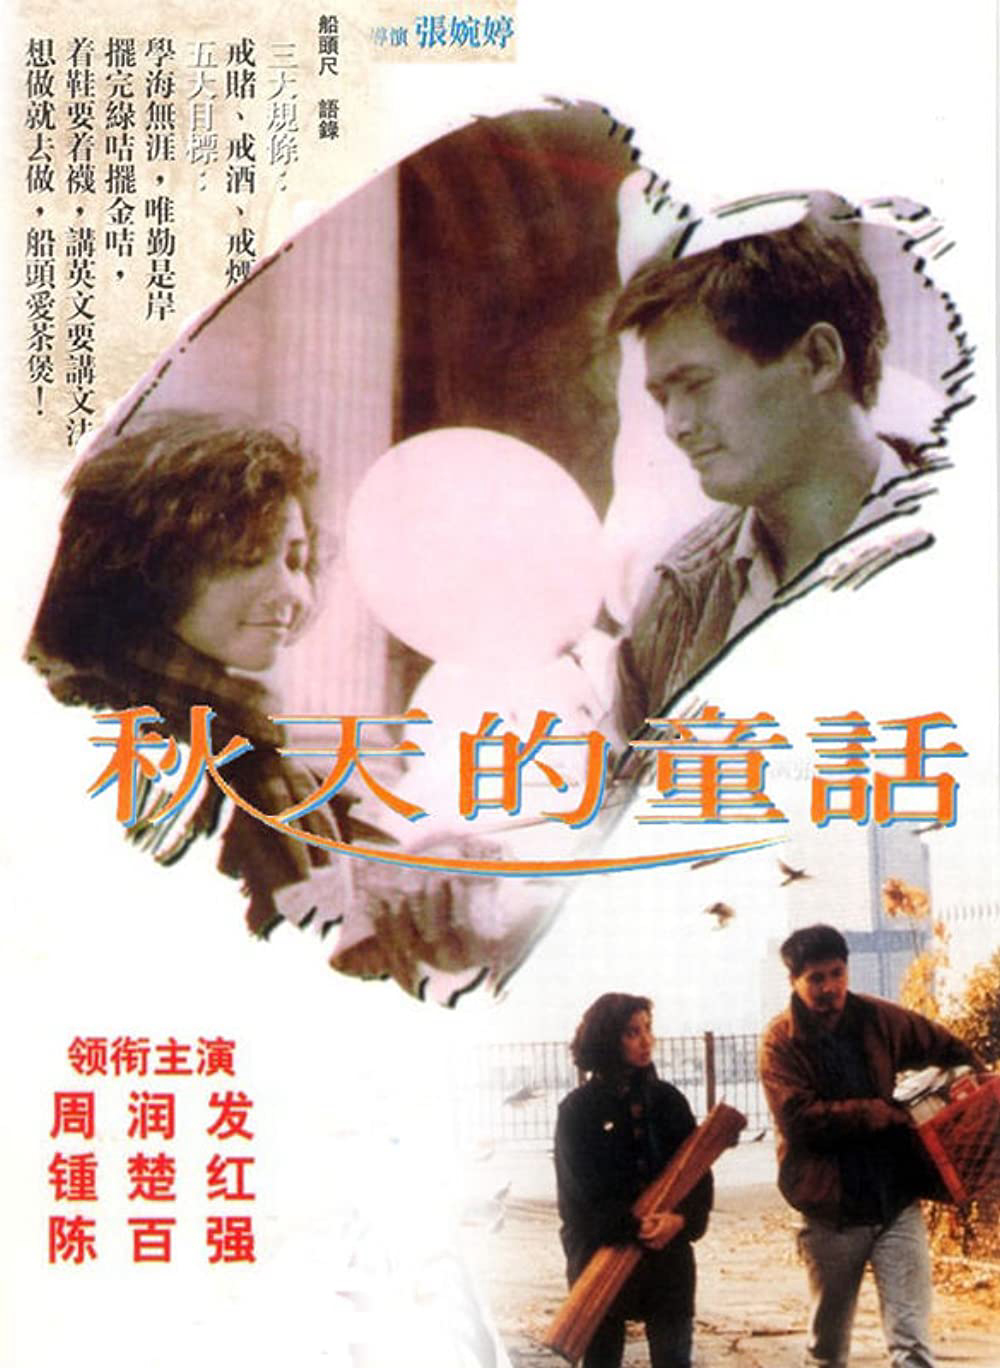 Poster Phim Đồng thoại mùa thu (An Autumn's Tale)